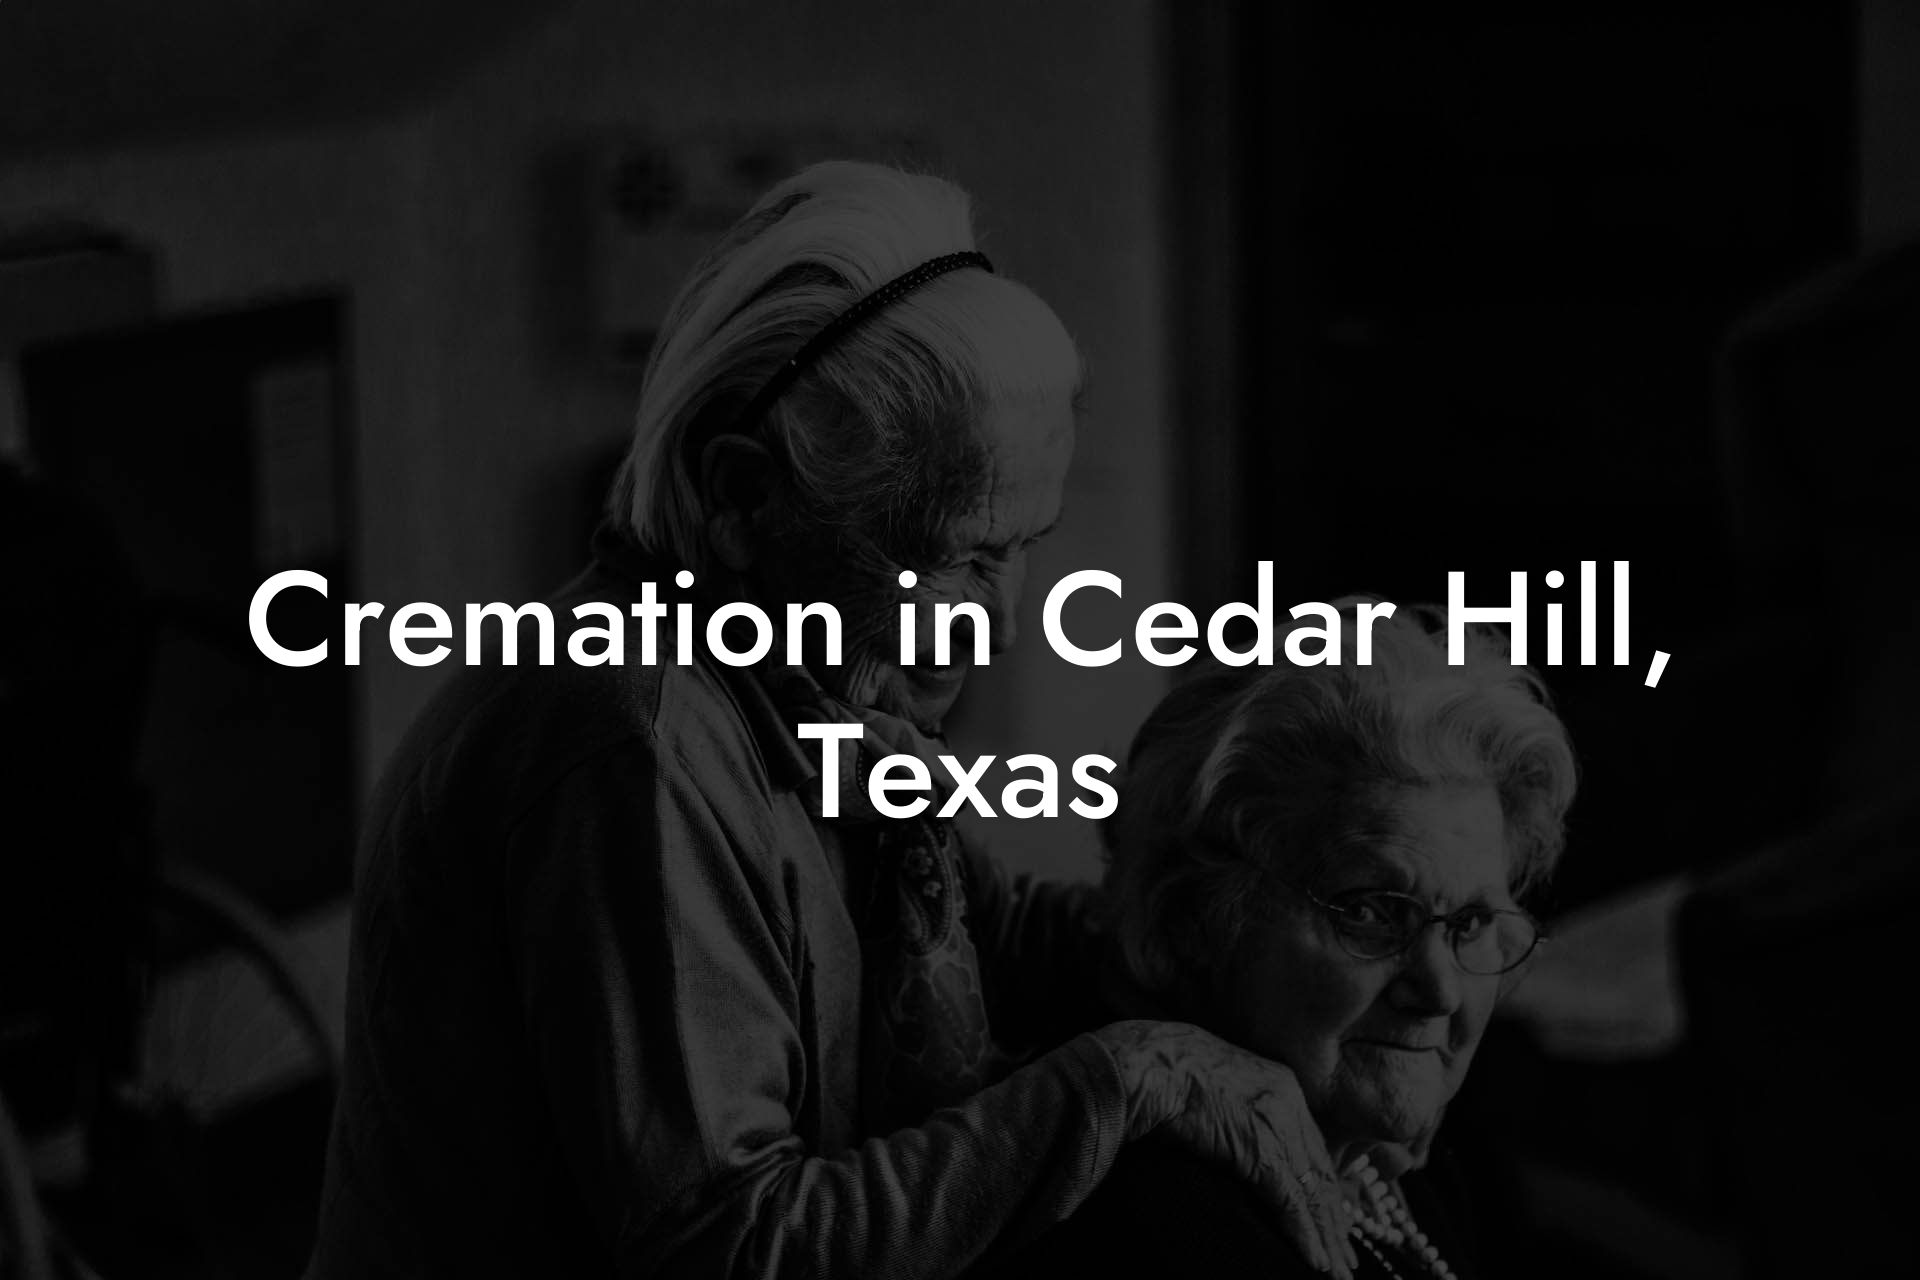 Cremation in Cedar Hill, Texas